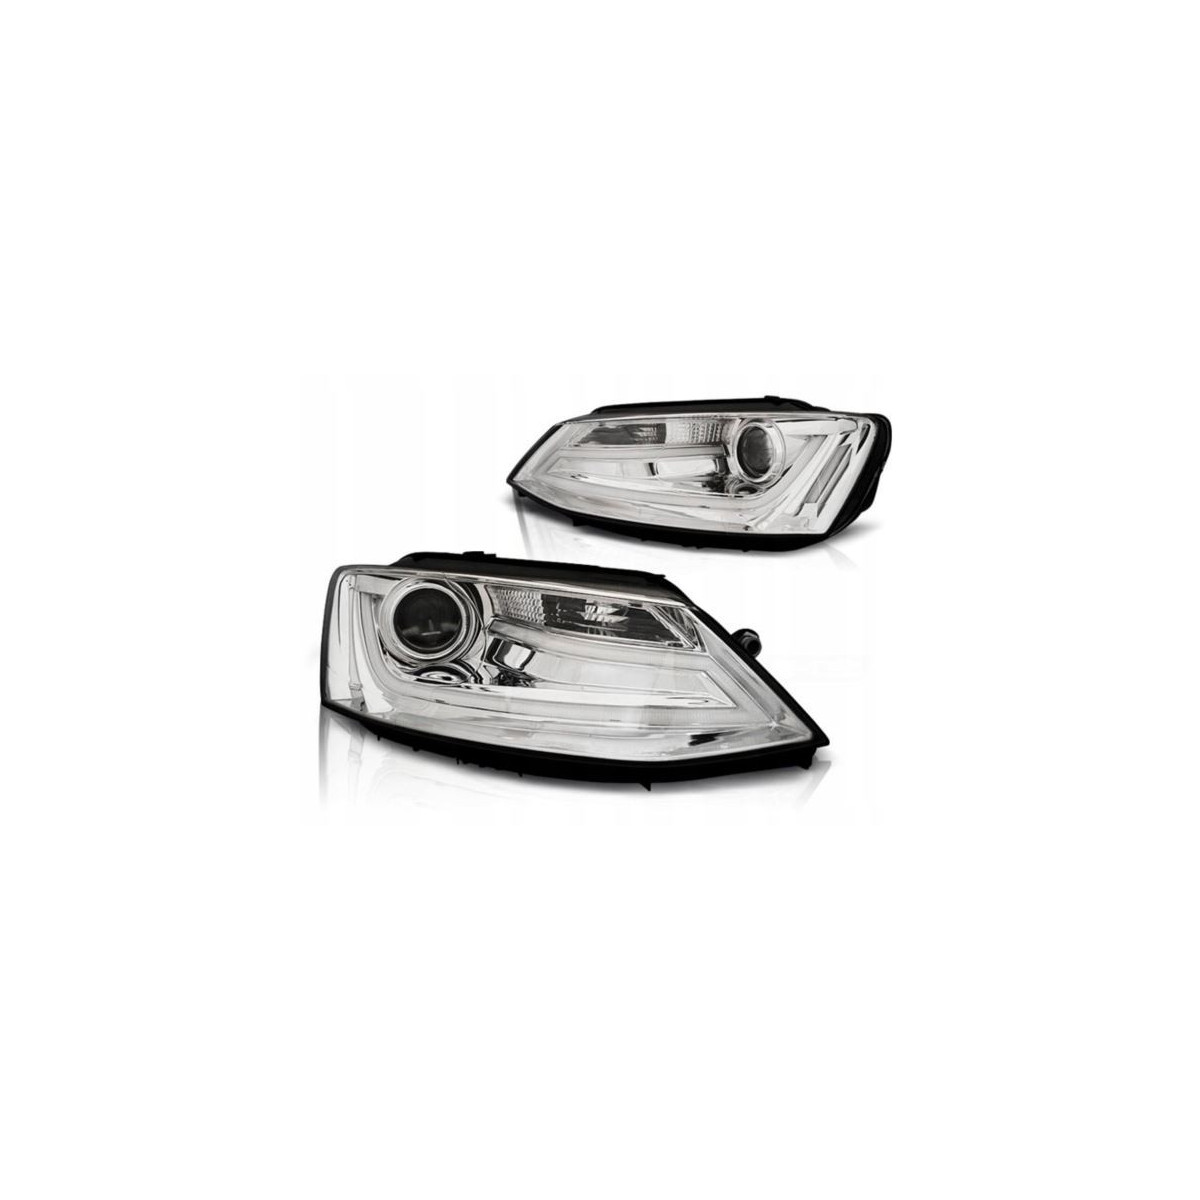 LAMPY VW JETTA 6 01/11- CHROME TUBE LIGHT LED DRL